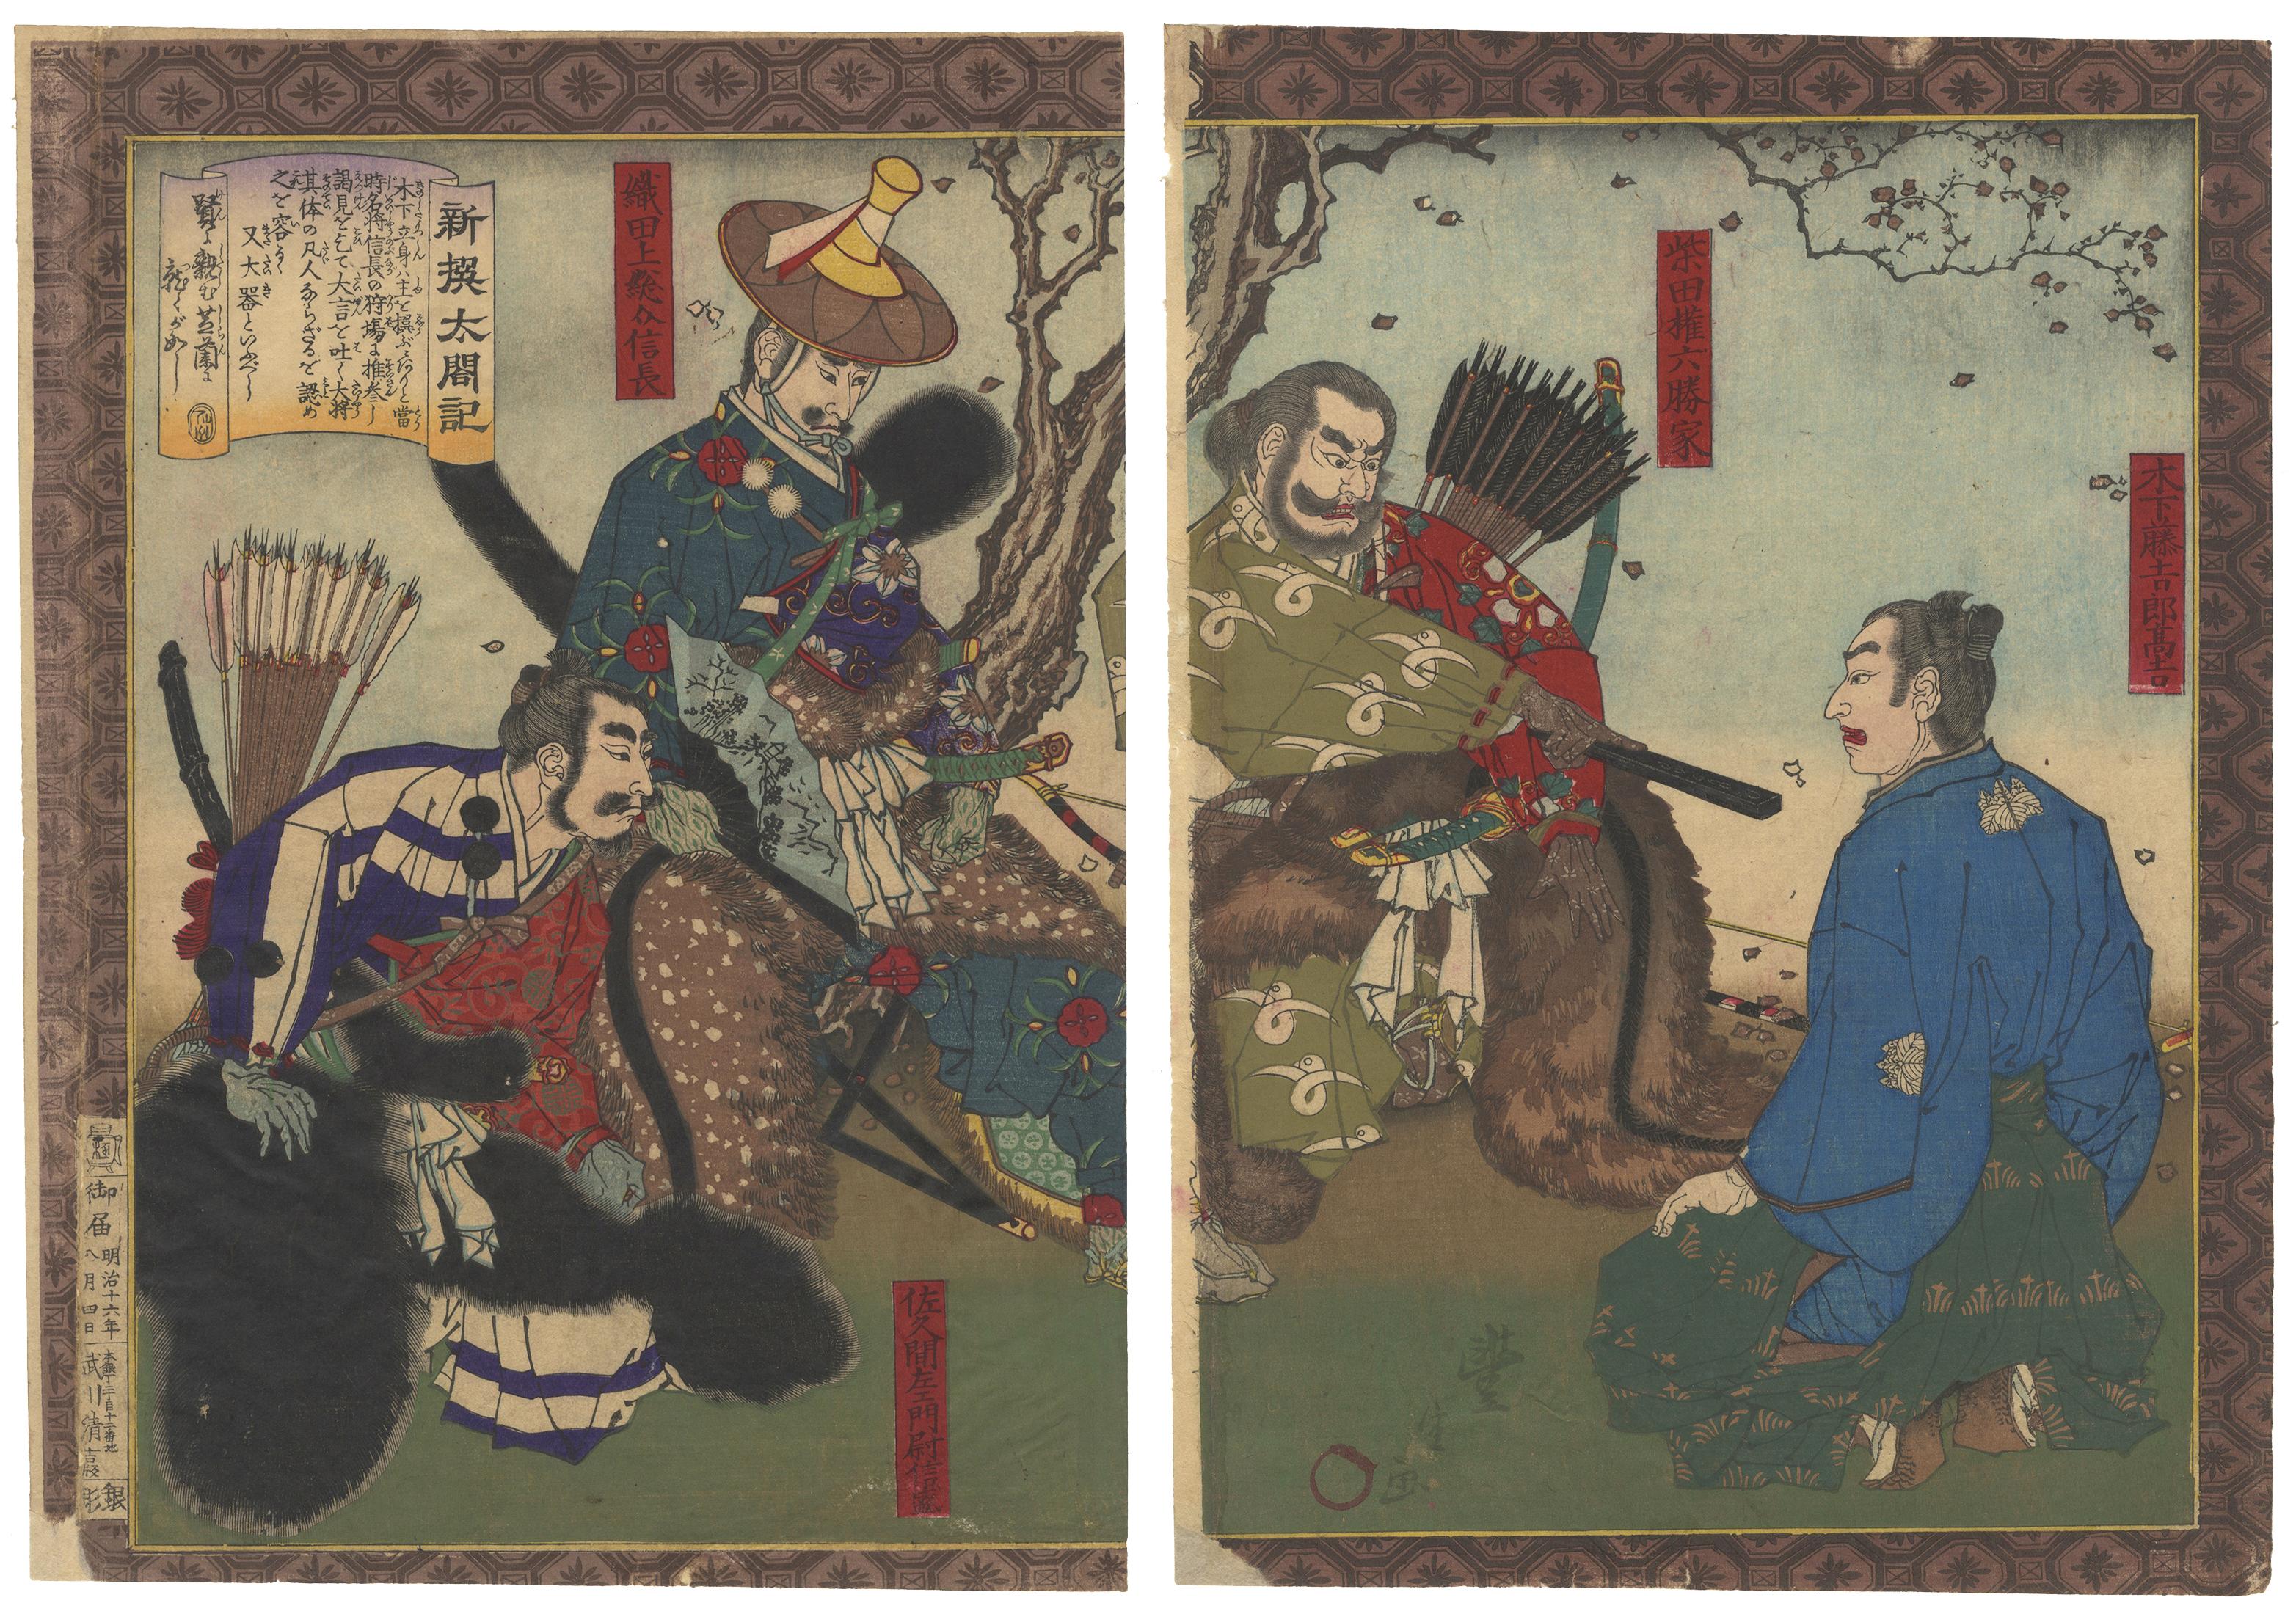 Toyonobu Utagawa Portrait Print - Toyonobu, Samurai, Original Japanese Woodblock Print, Ukiyo-e, Japanese History